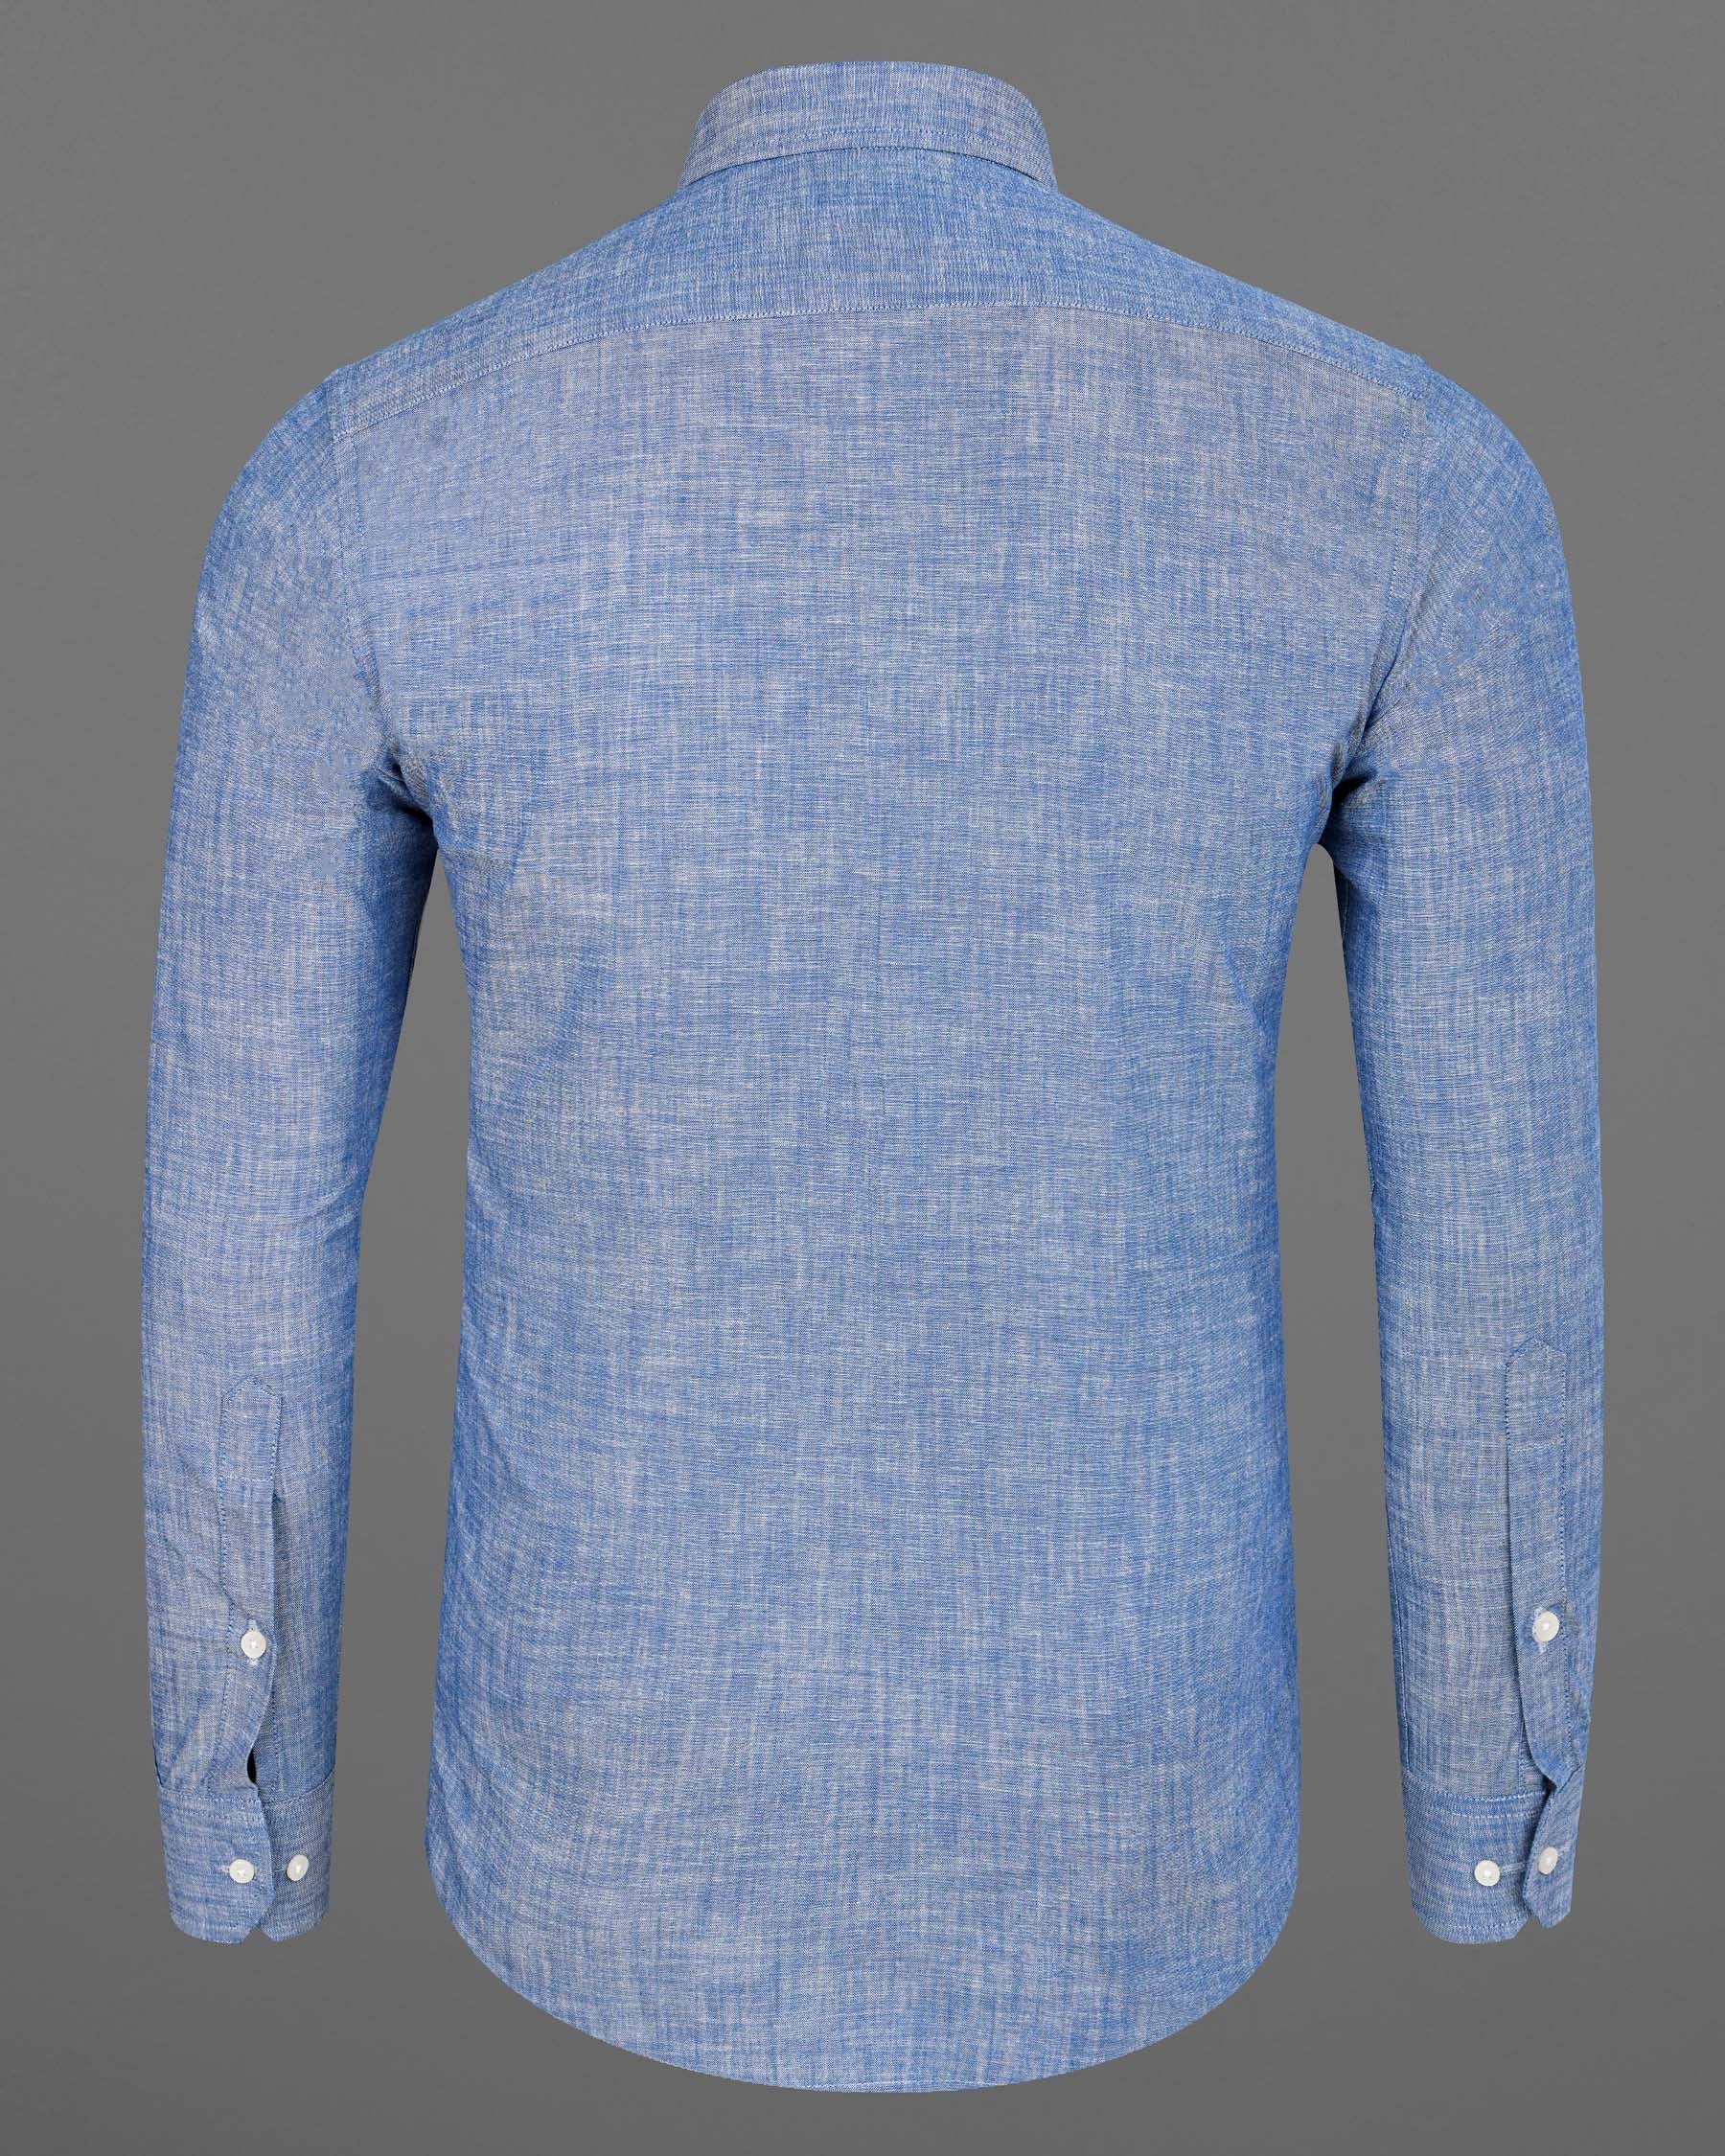 Nepal Blue Two Tone Chambray Premium Cotton Shirt